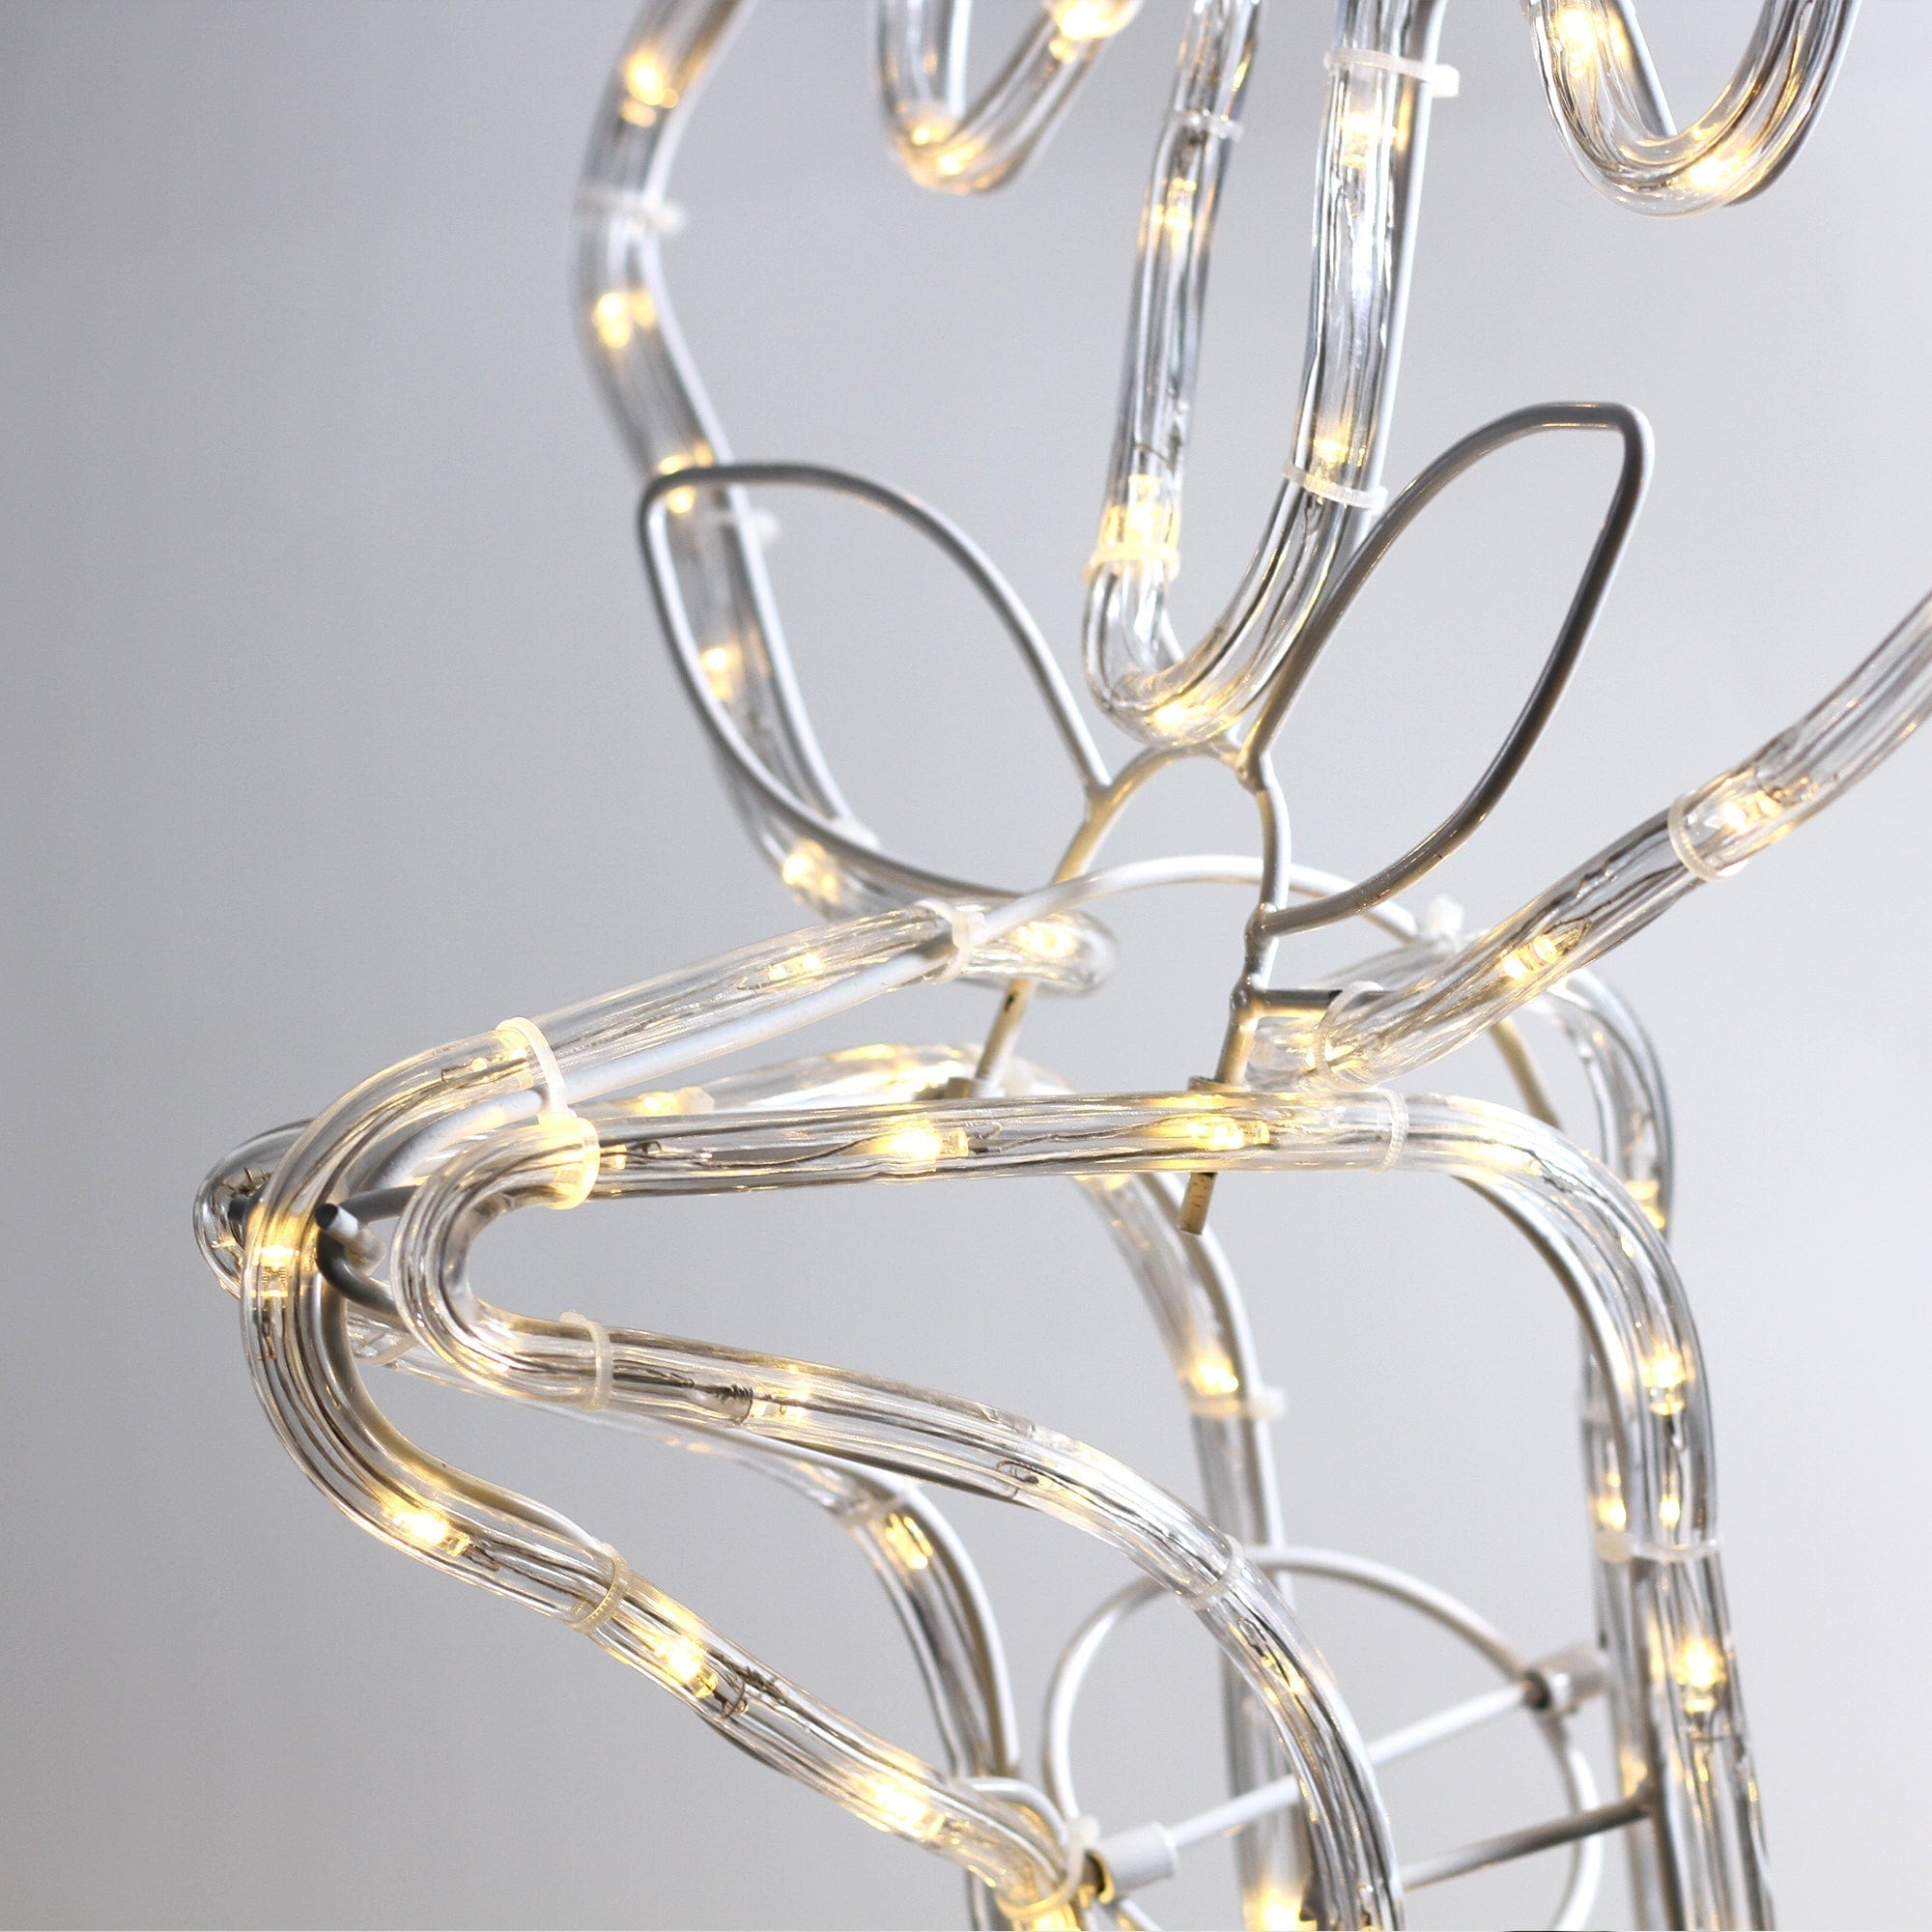 Promo Christmas Figure 3D Illuminated LED Reindeer with Motor | Three Colour Options